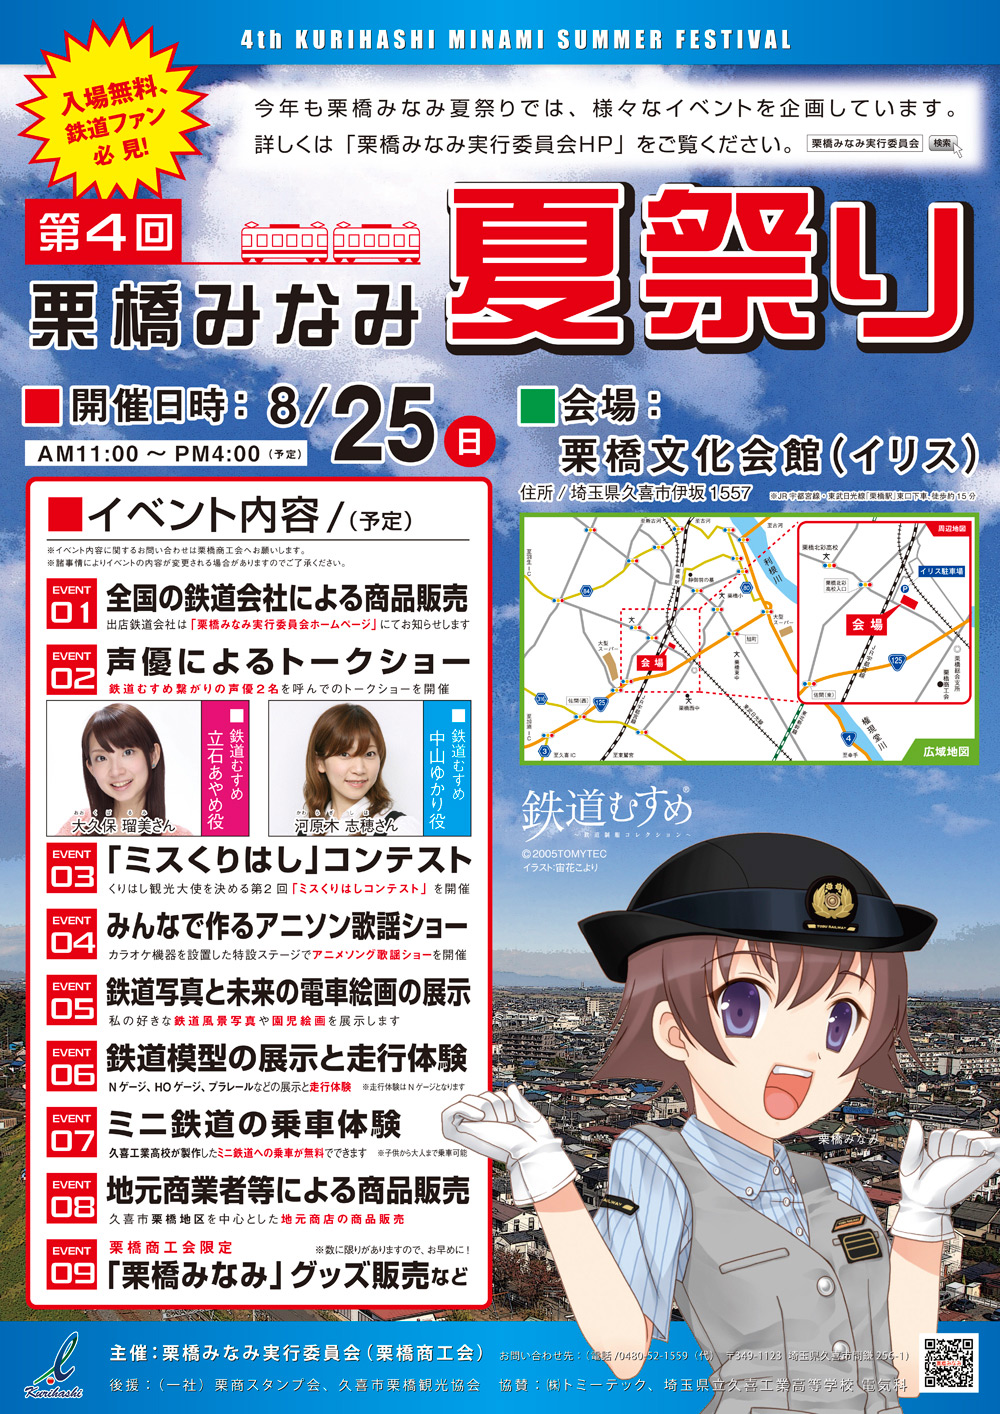 /contents/img/news/130725-03-kurihashi-poster.jpg